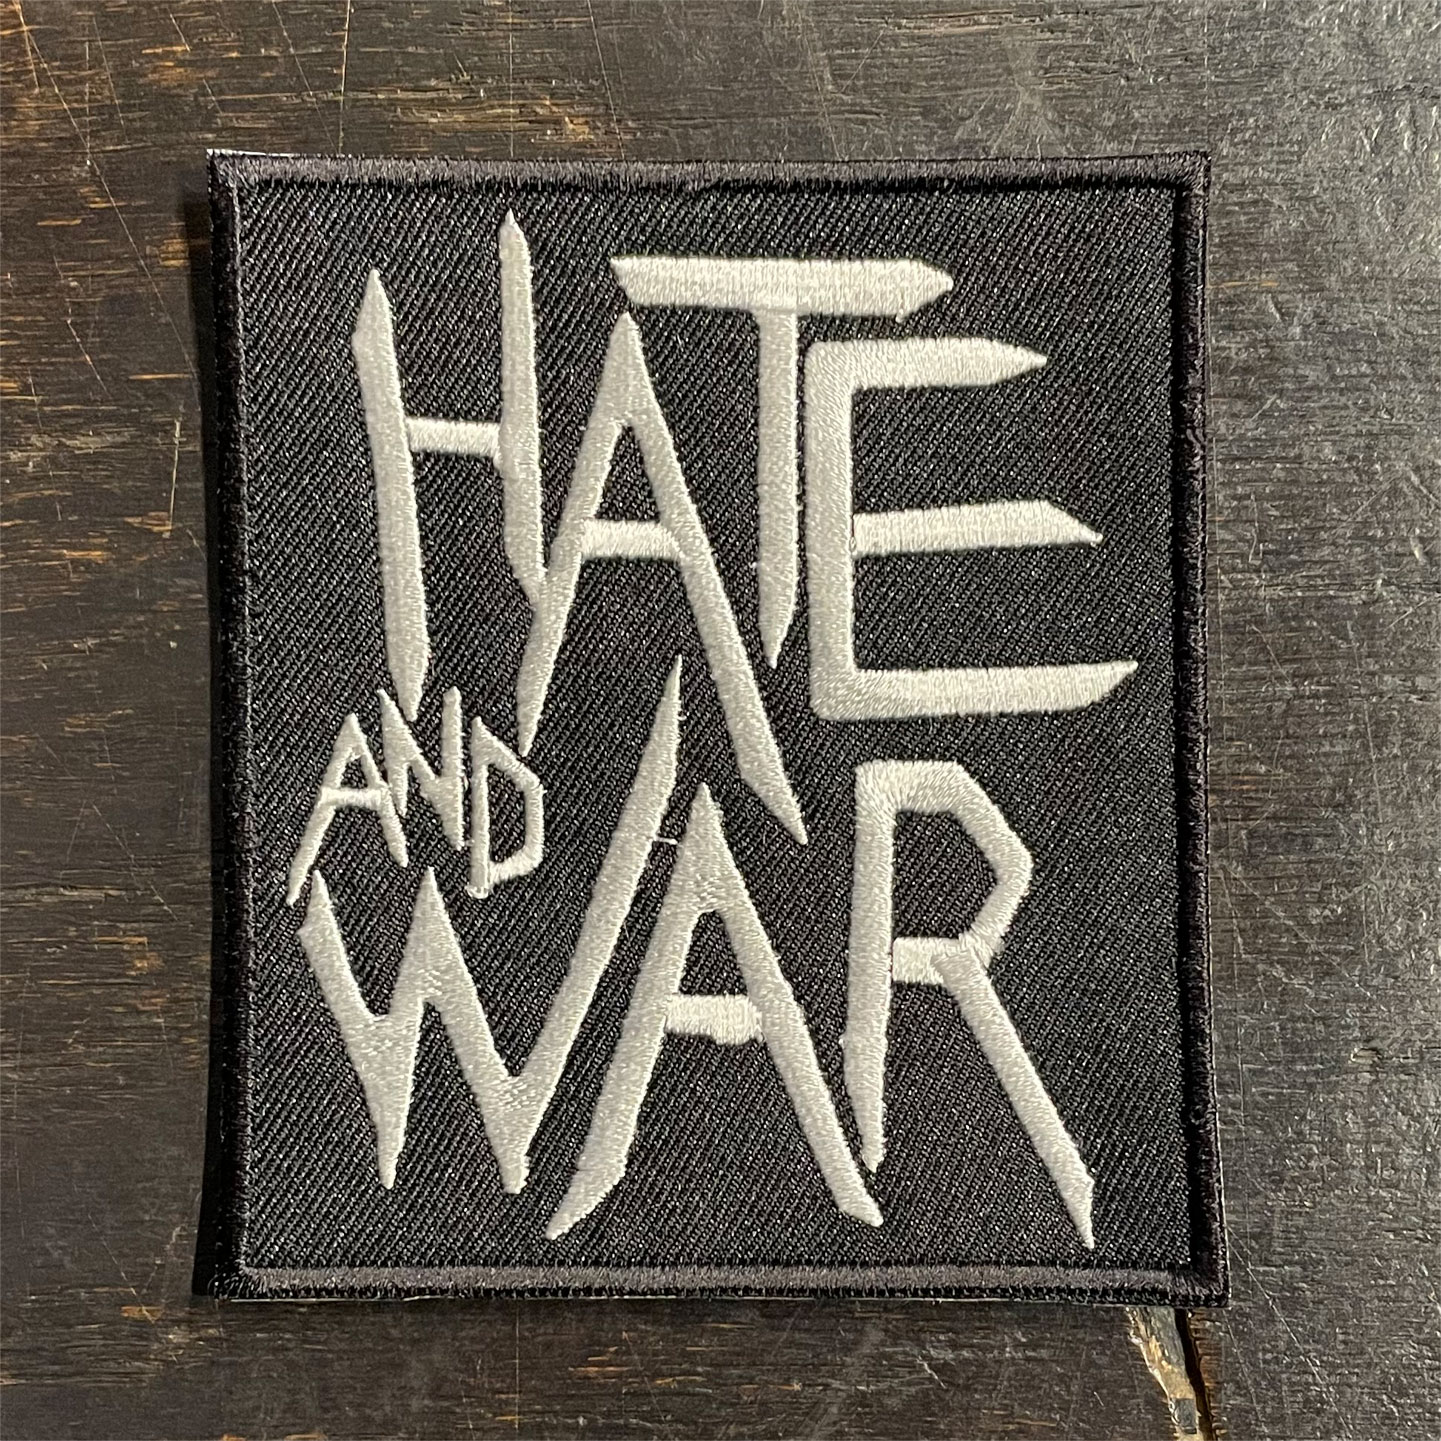 THE CLASH 刺繍ワッペン HATE AND WAR